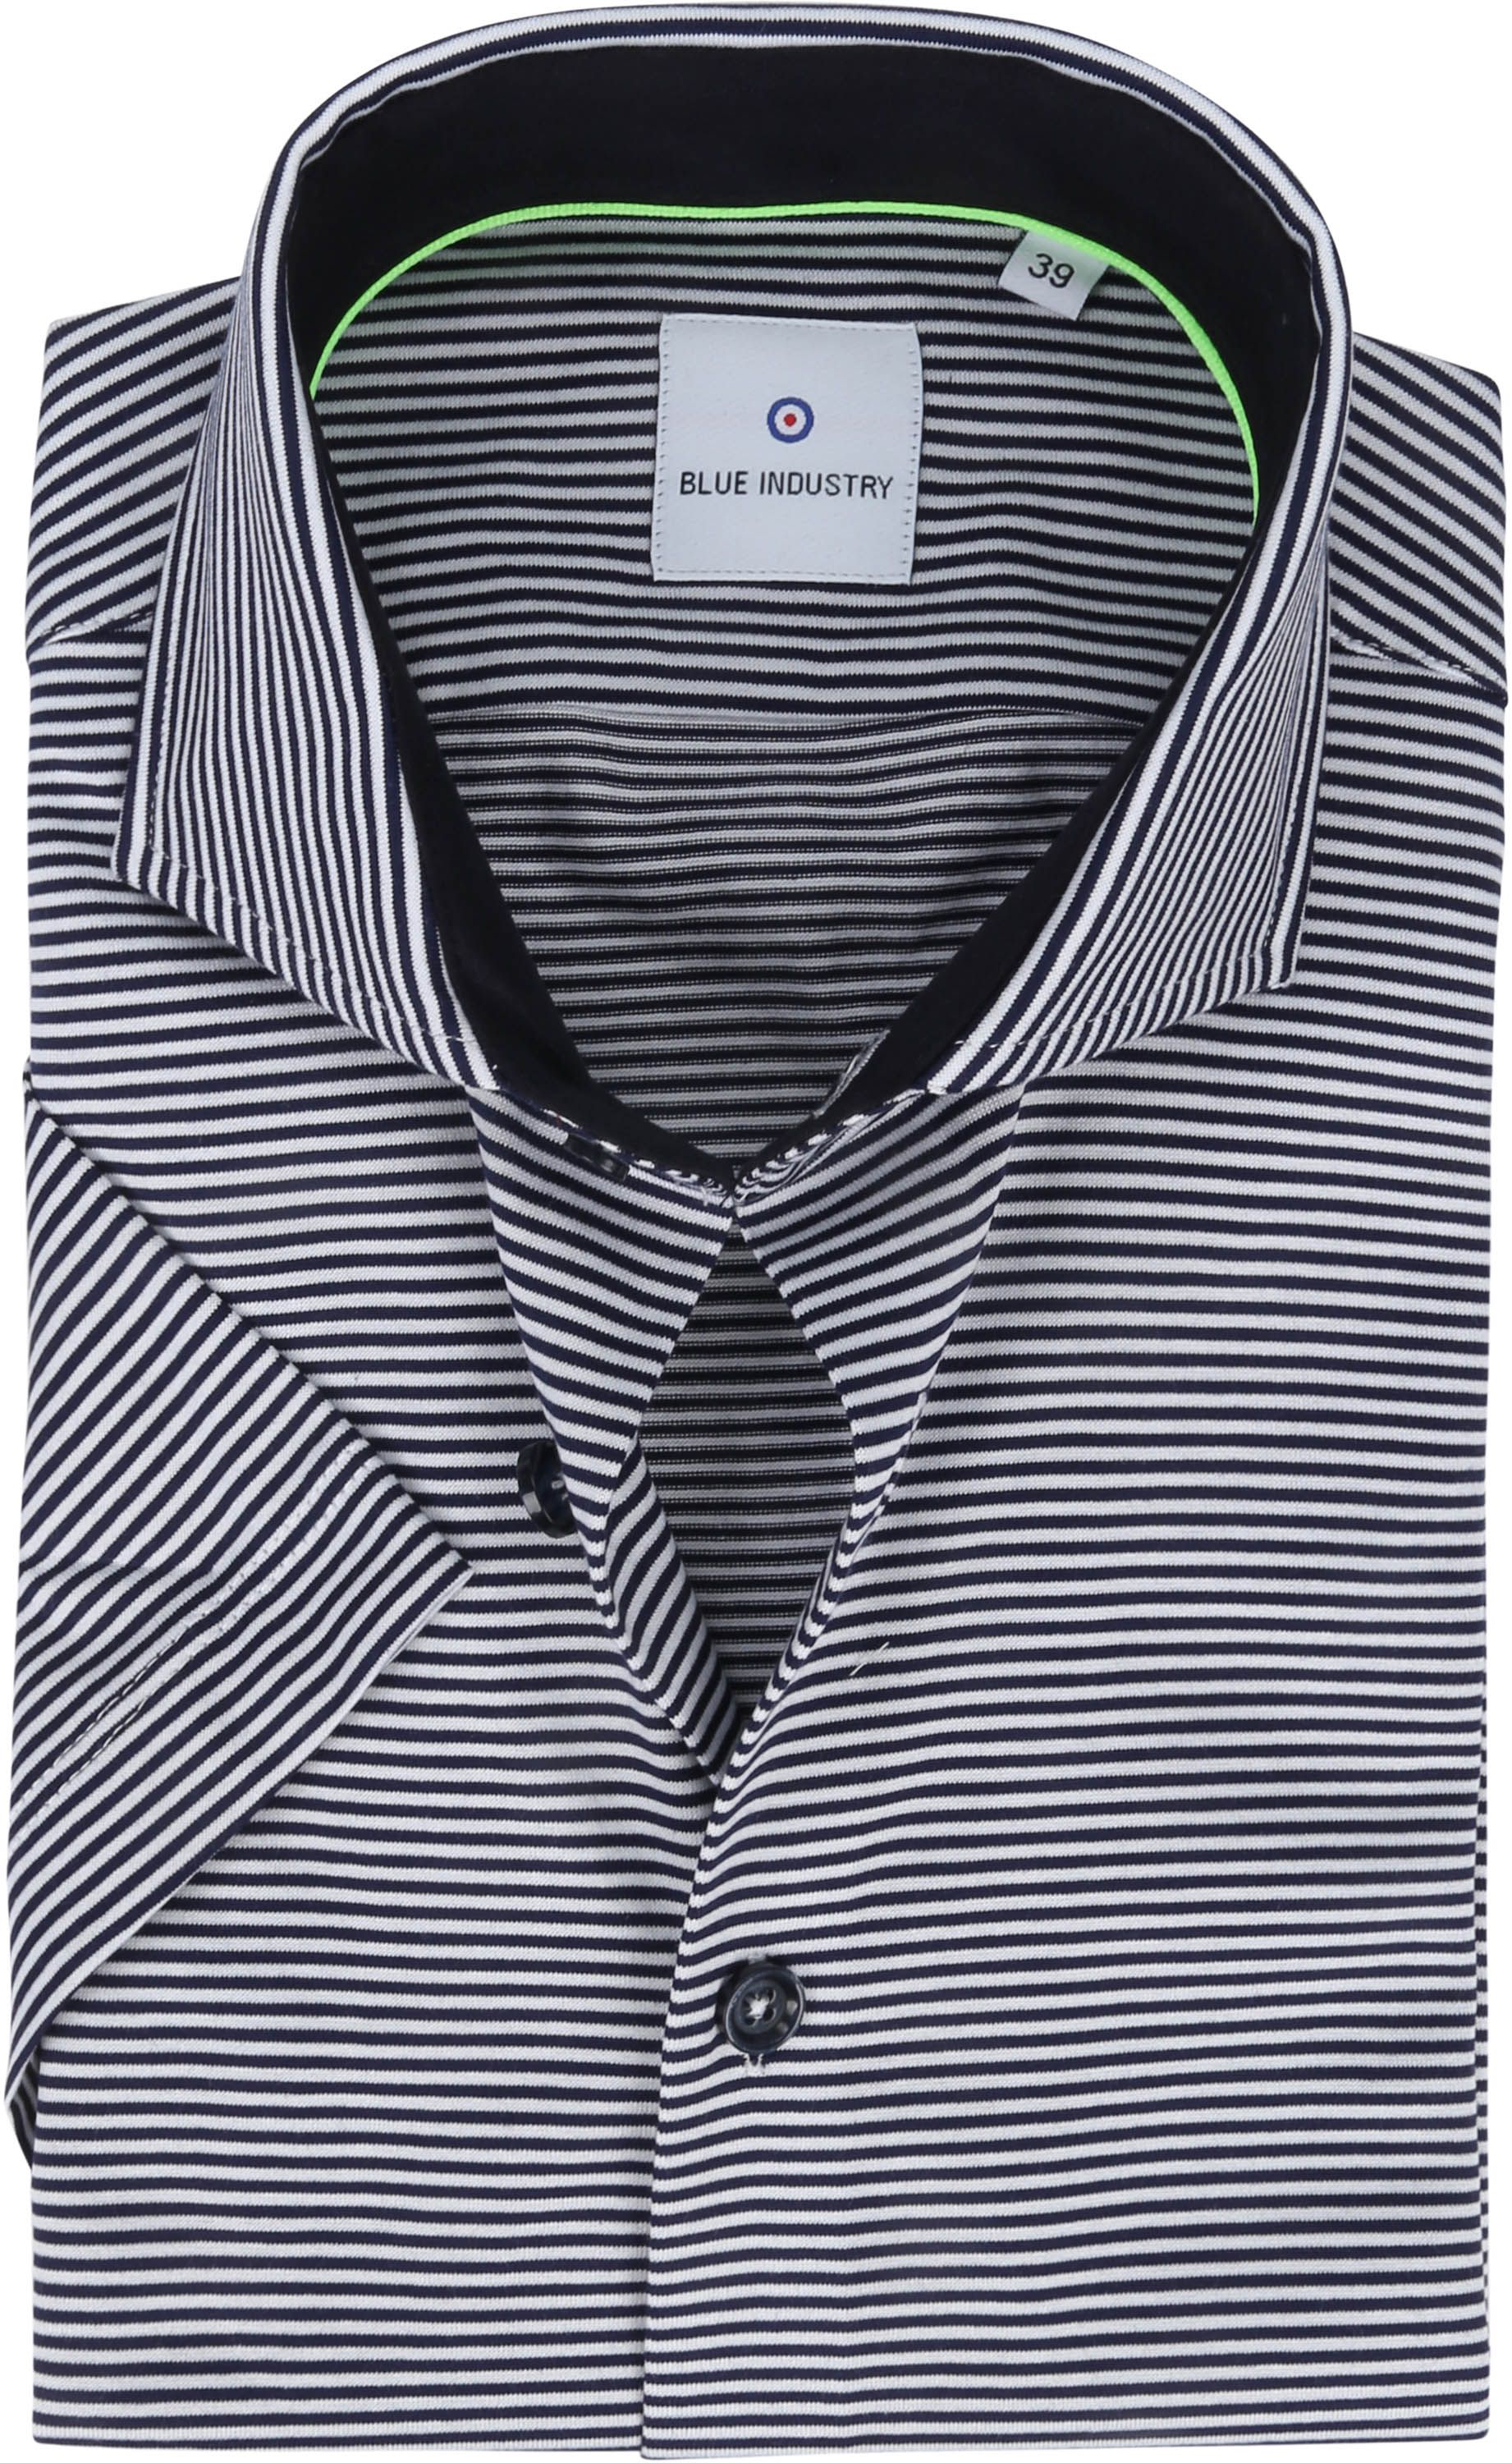 Industry SHS Shirt Stripe Blue size 15